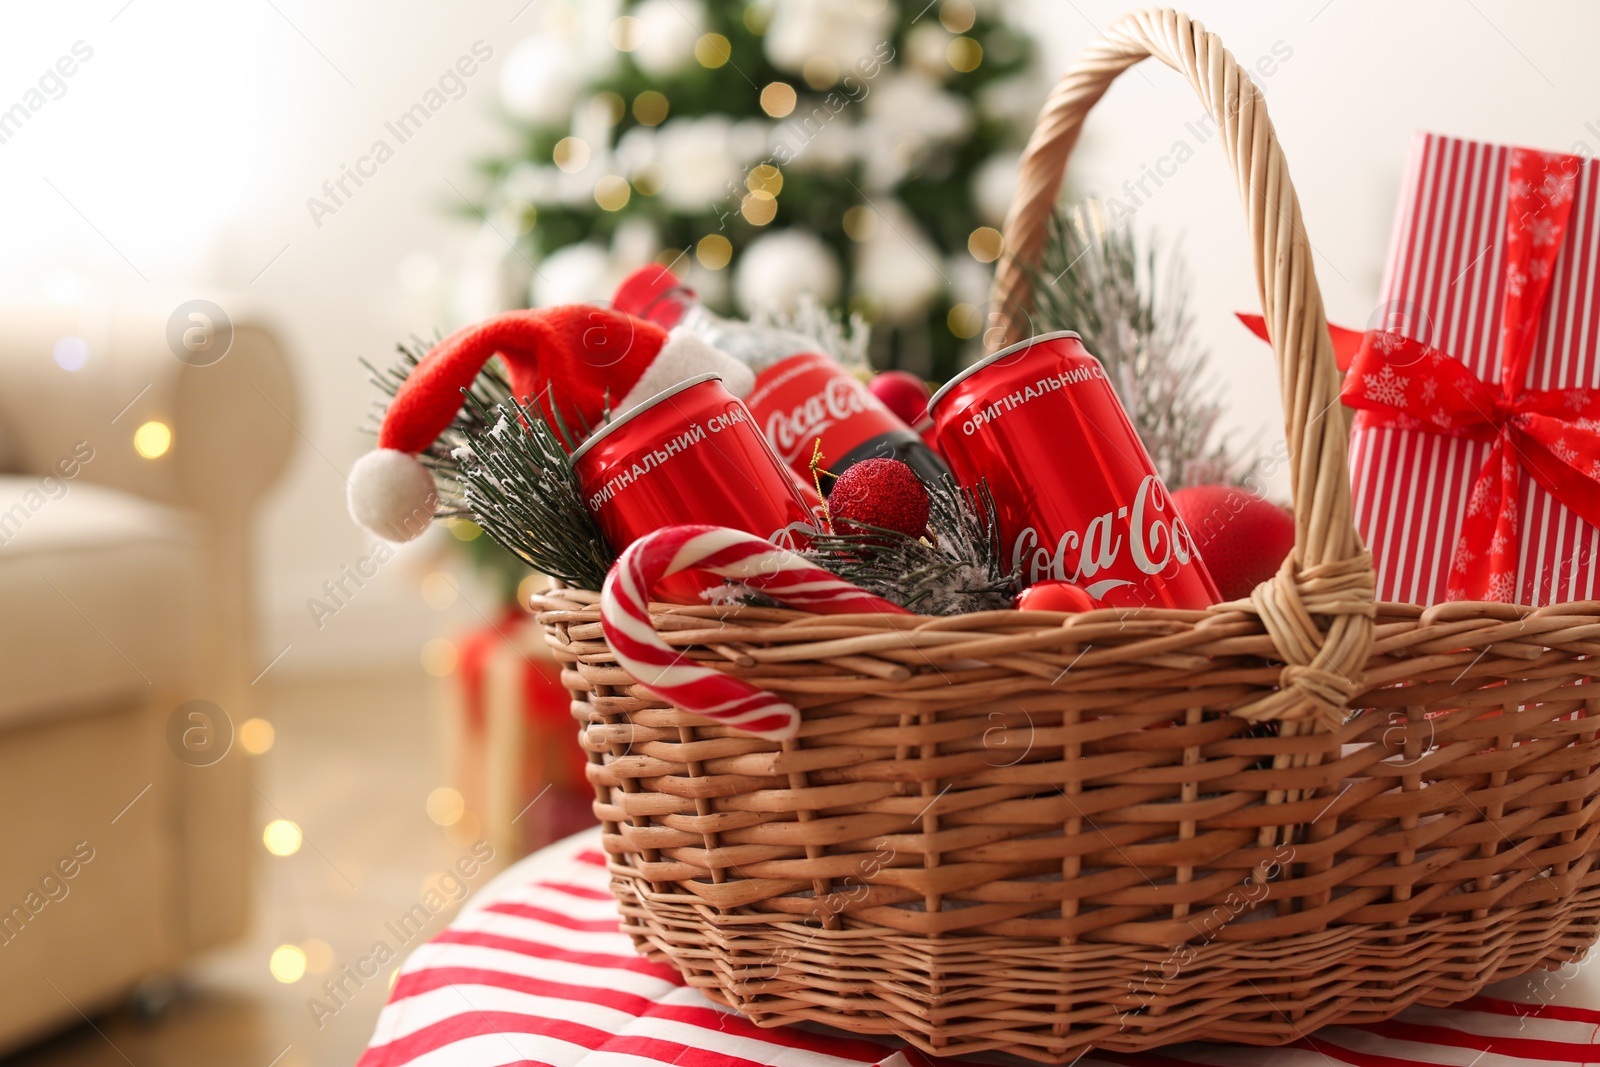 Photo of MYKOLAIV, UKRAINE - January 01, 2021: Basket with Coca-Cola drinks against blurred Christmas tree